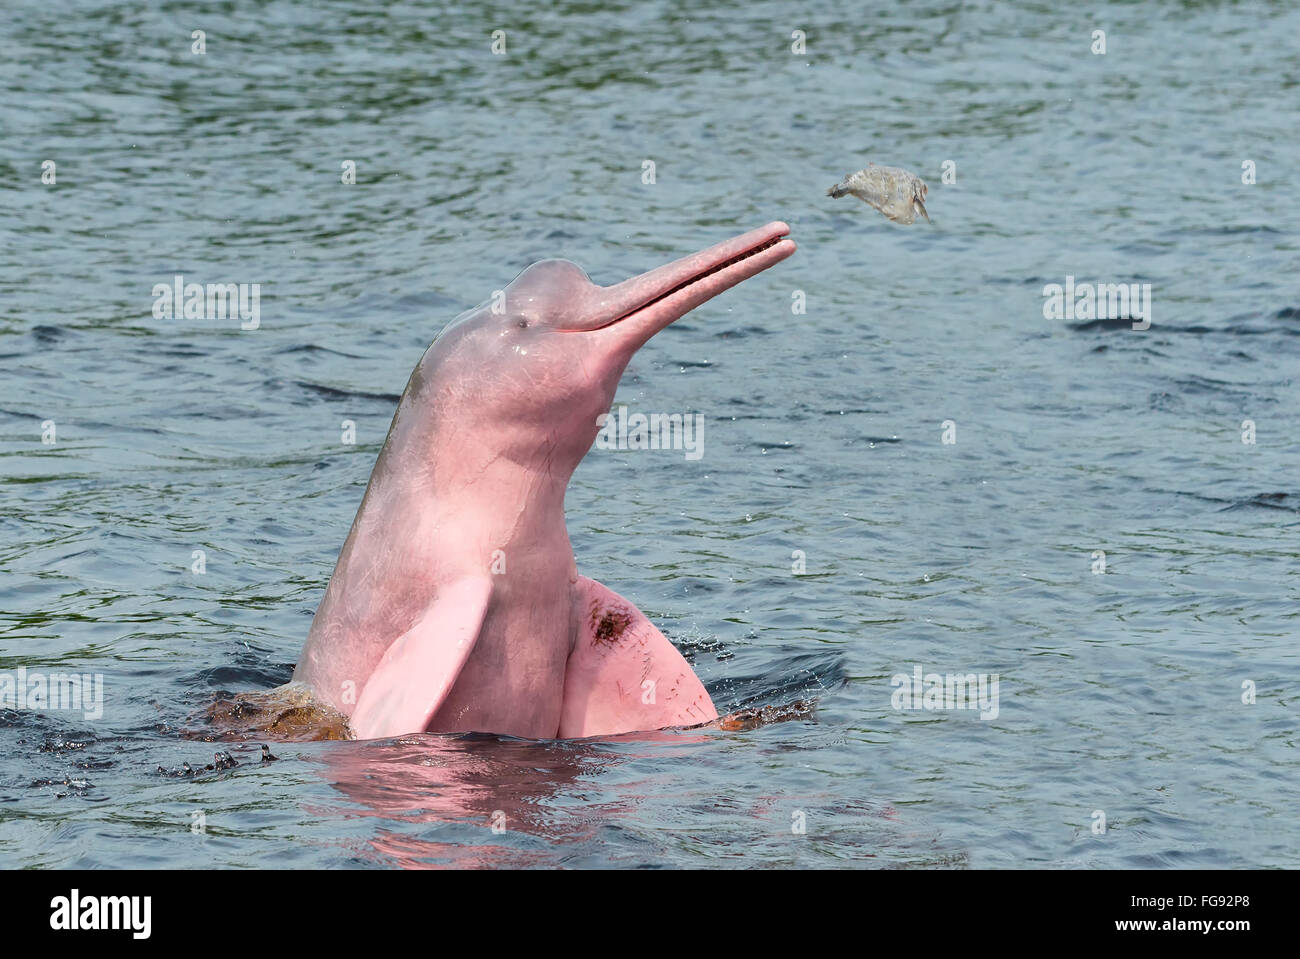 Rosa delphin -Fotos und -Bildmaterial in hoher Auflösung – Alamy